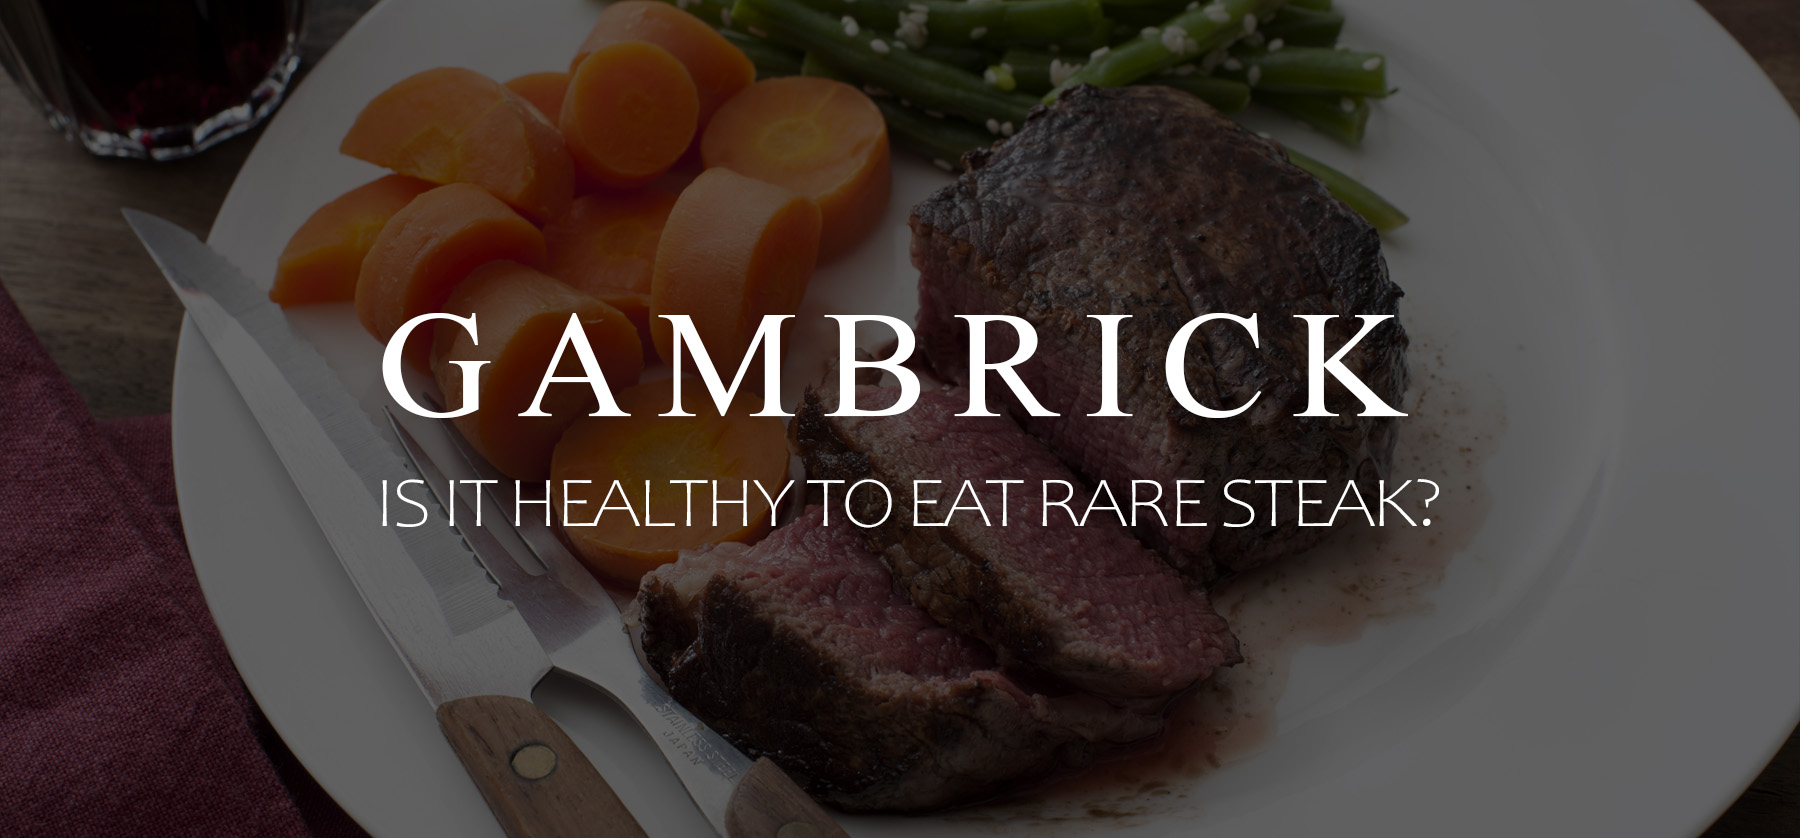 Is It Healthy To Eat Rare Steak? - Gambrick.com